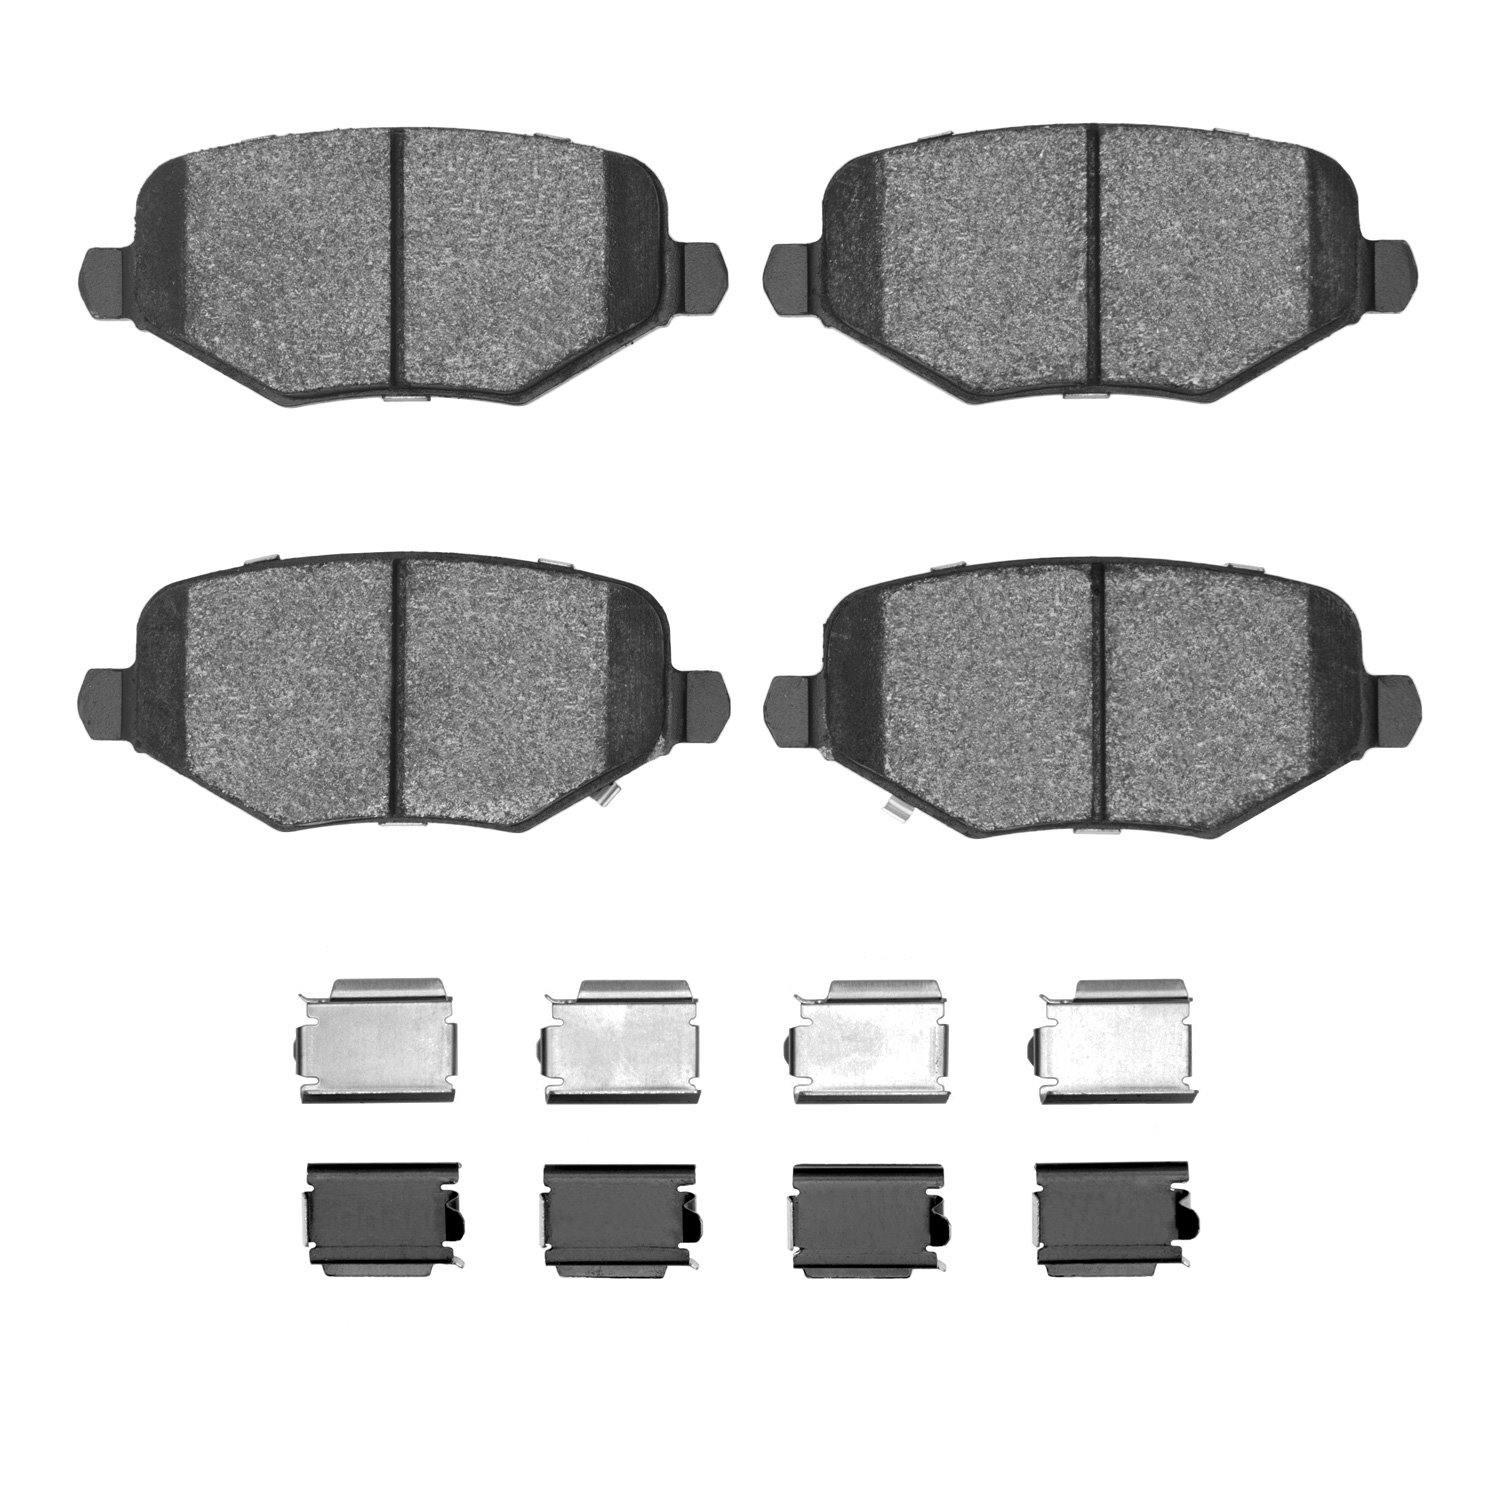 1310-1719-02 3000-Series Ceramic Brake Pads & Hardware Kit, 2009-2014 Multiple Makes/Models, Position: Rear